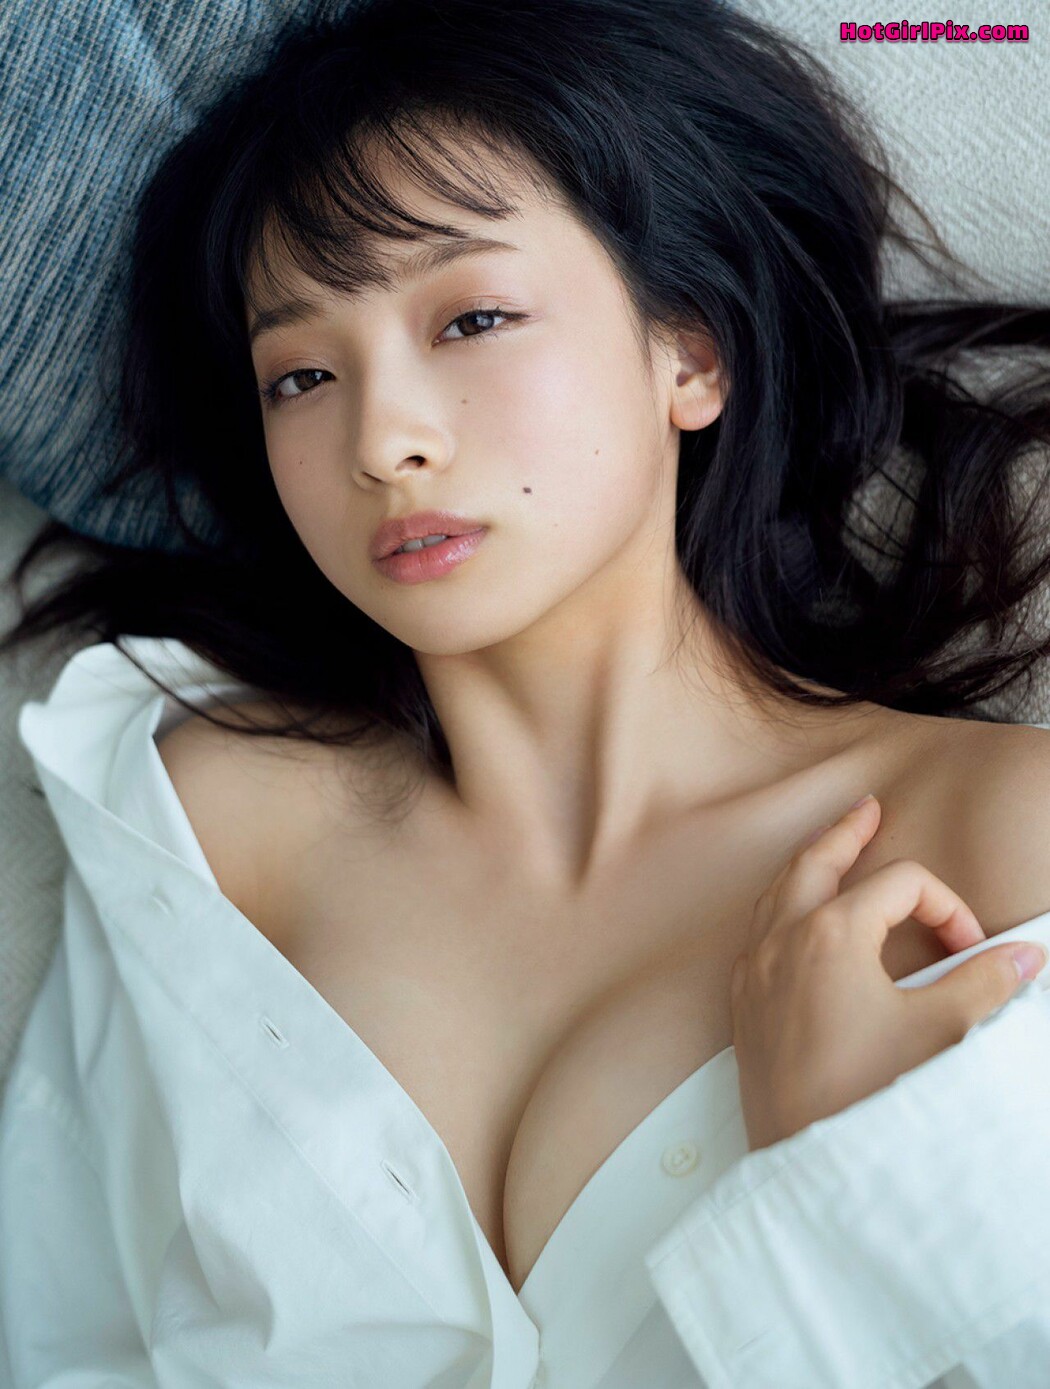 [FRIDAY] Asuka Hanamura - Beauty Bust See-Through Cover Photo